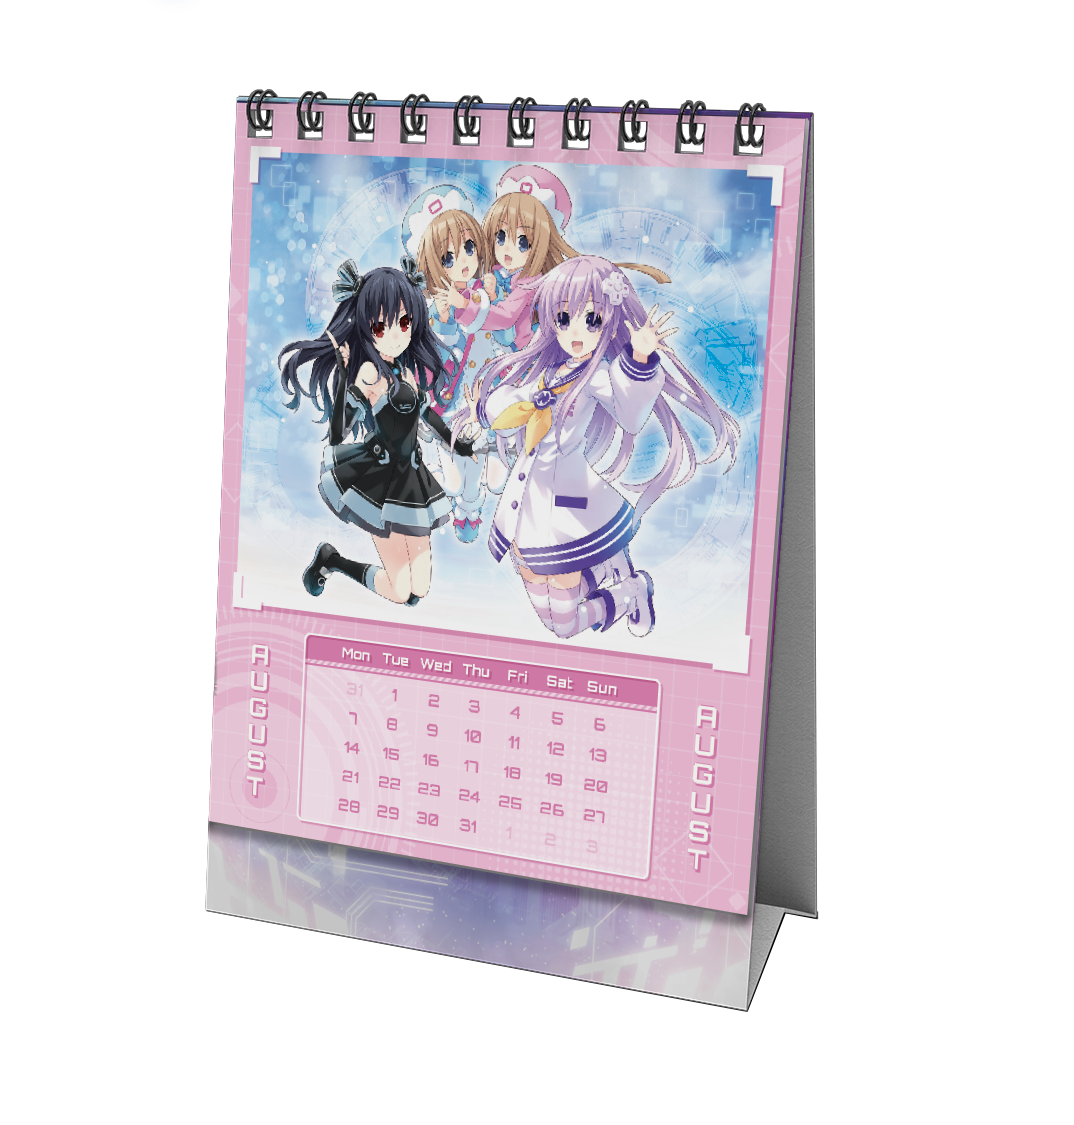 Neptunia: Sisters VS Sisters - Calendar Edition - PS4®